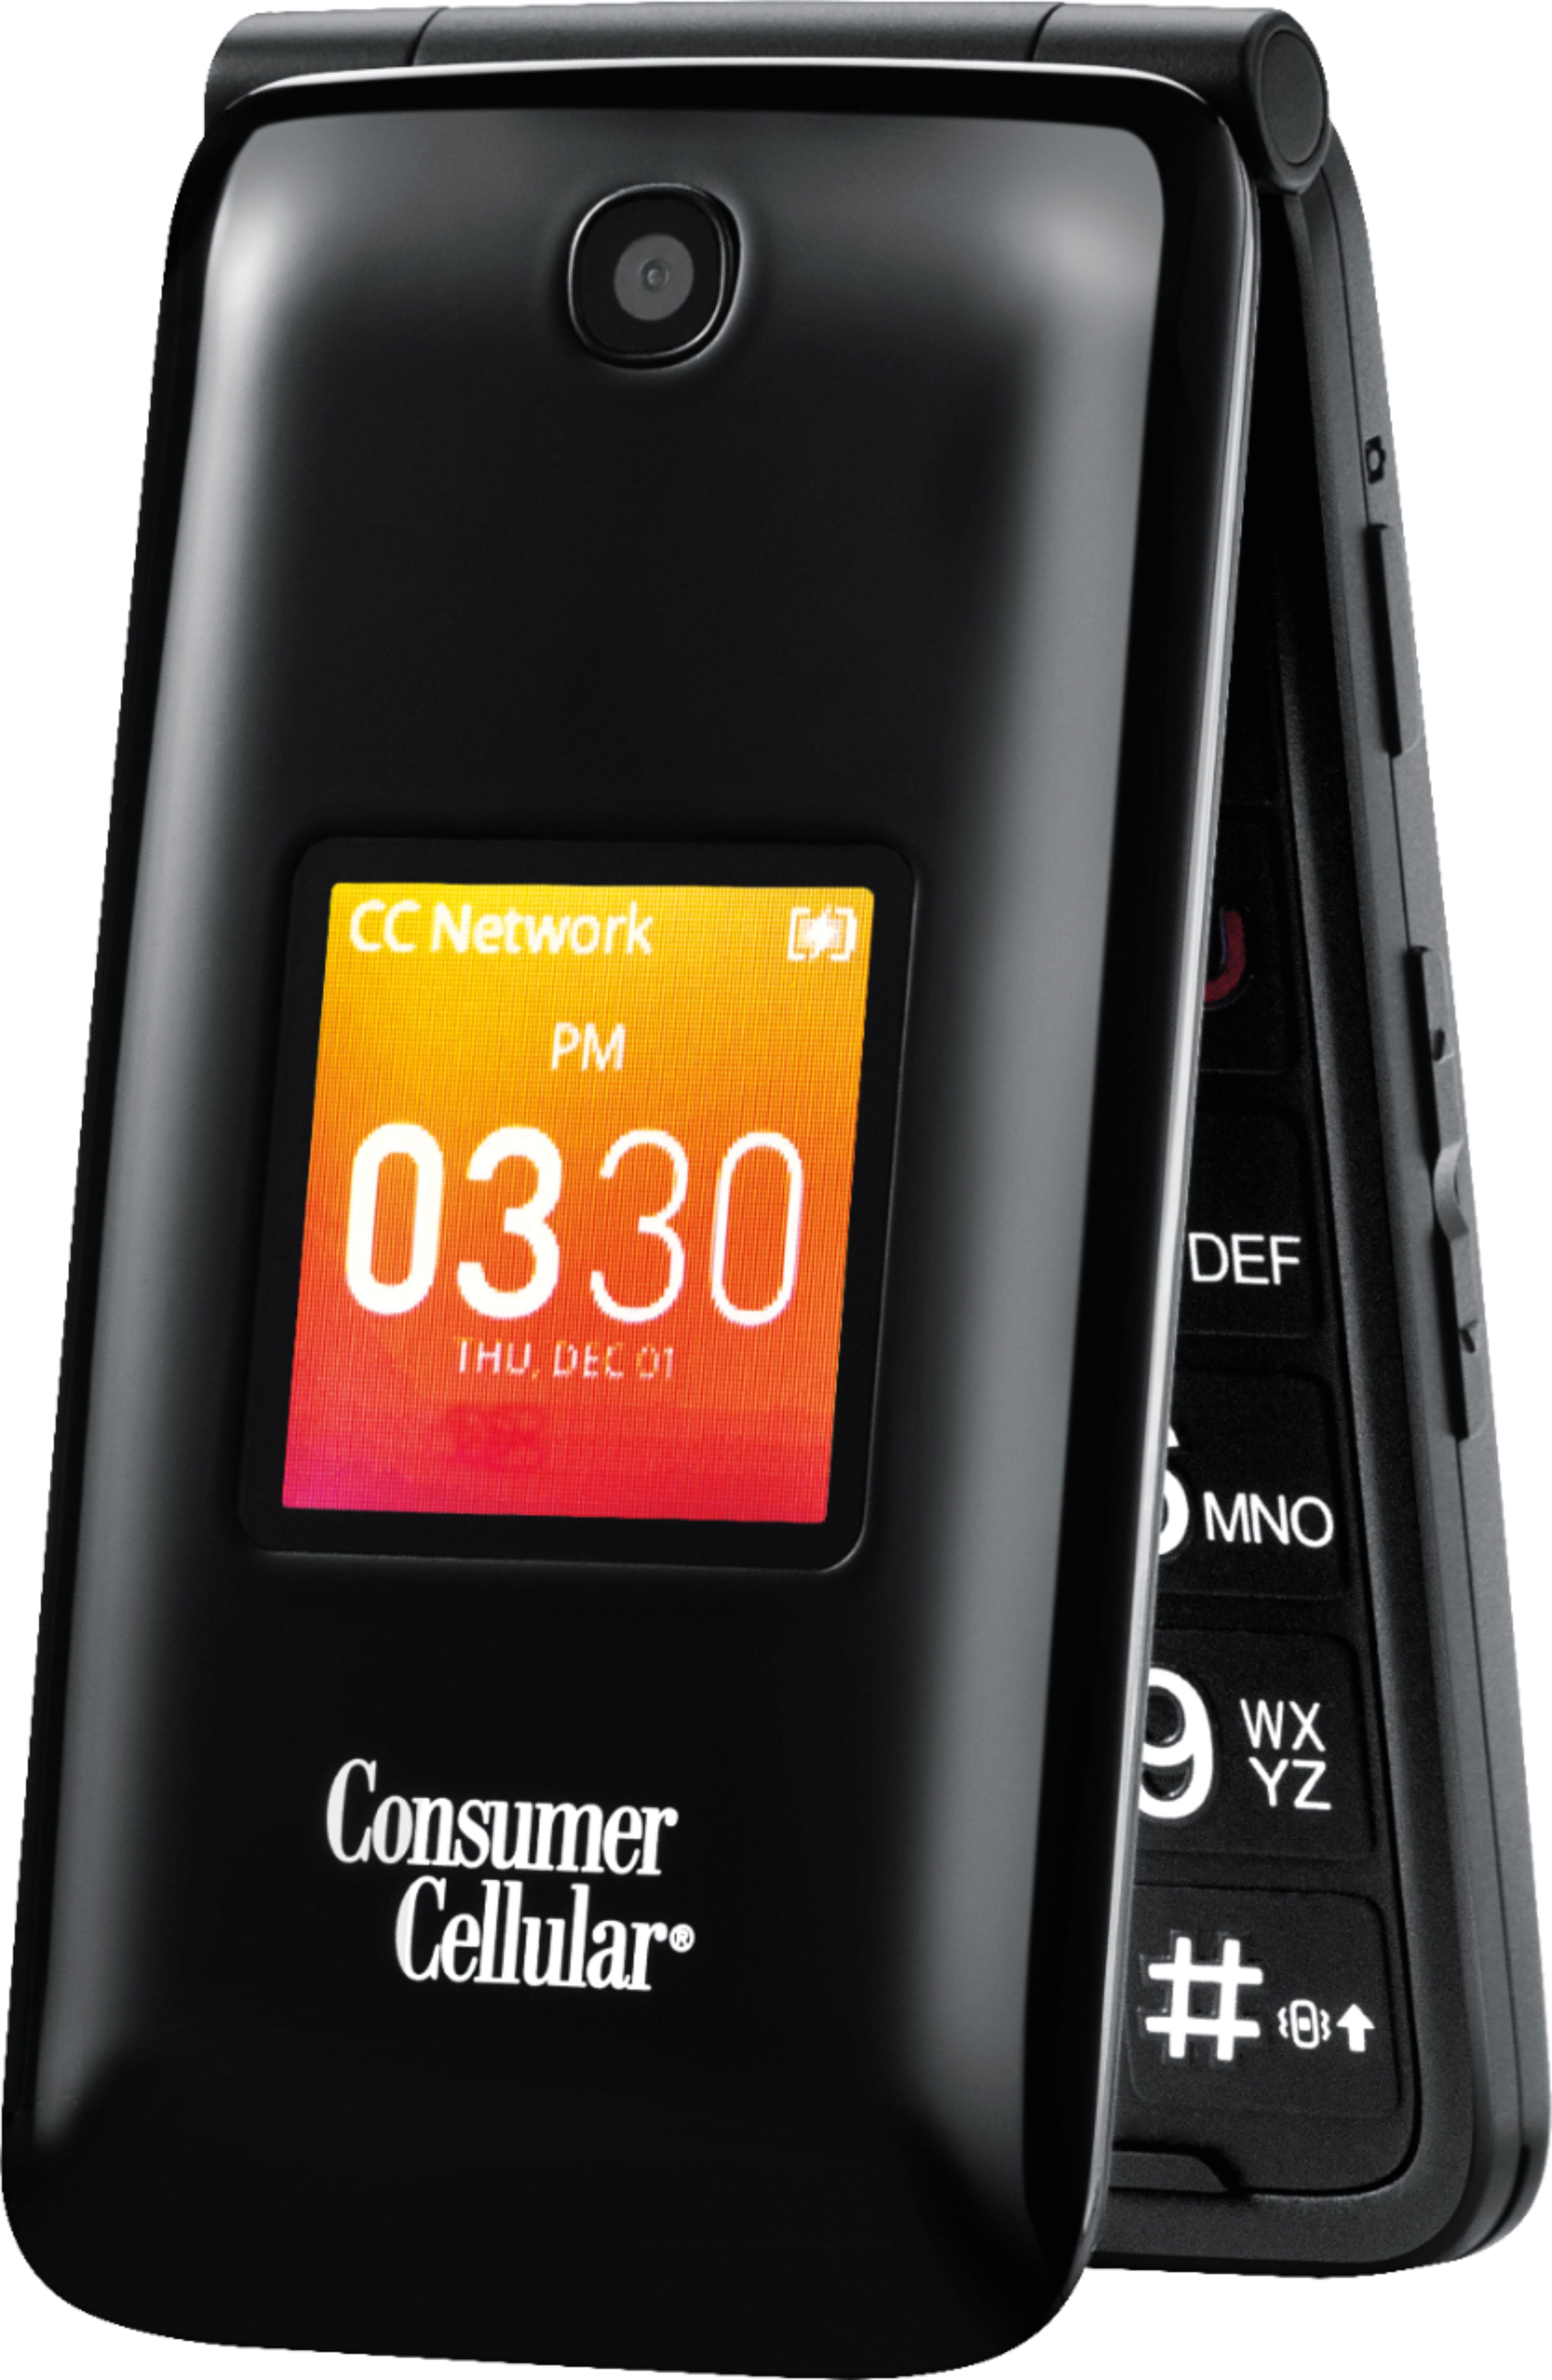 Customer Reviews: Alcatel Go Flip Cell Phone Black (Consumer Cellular ...